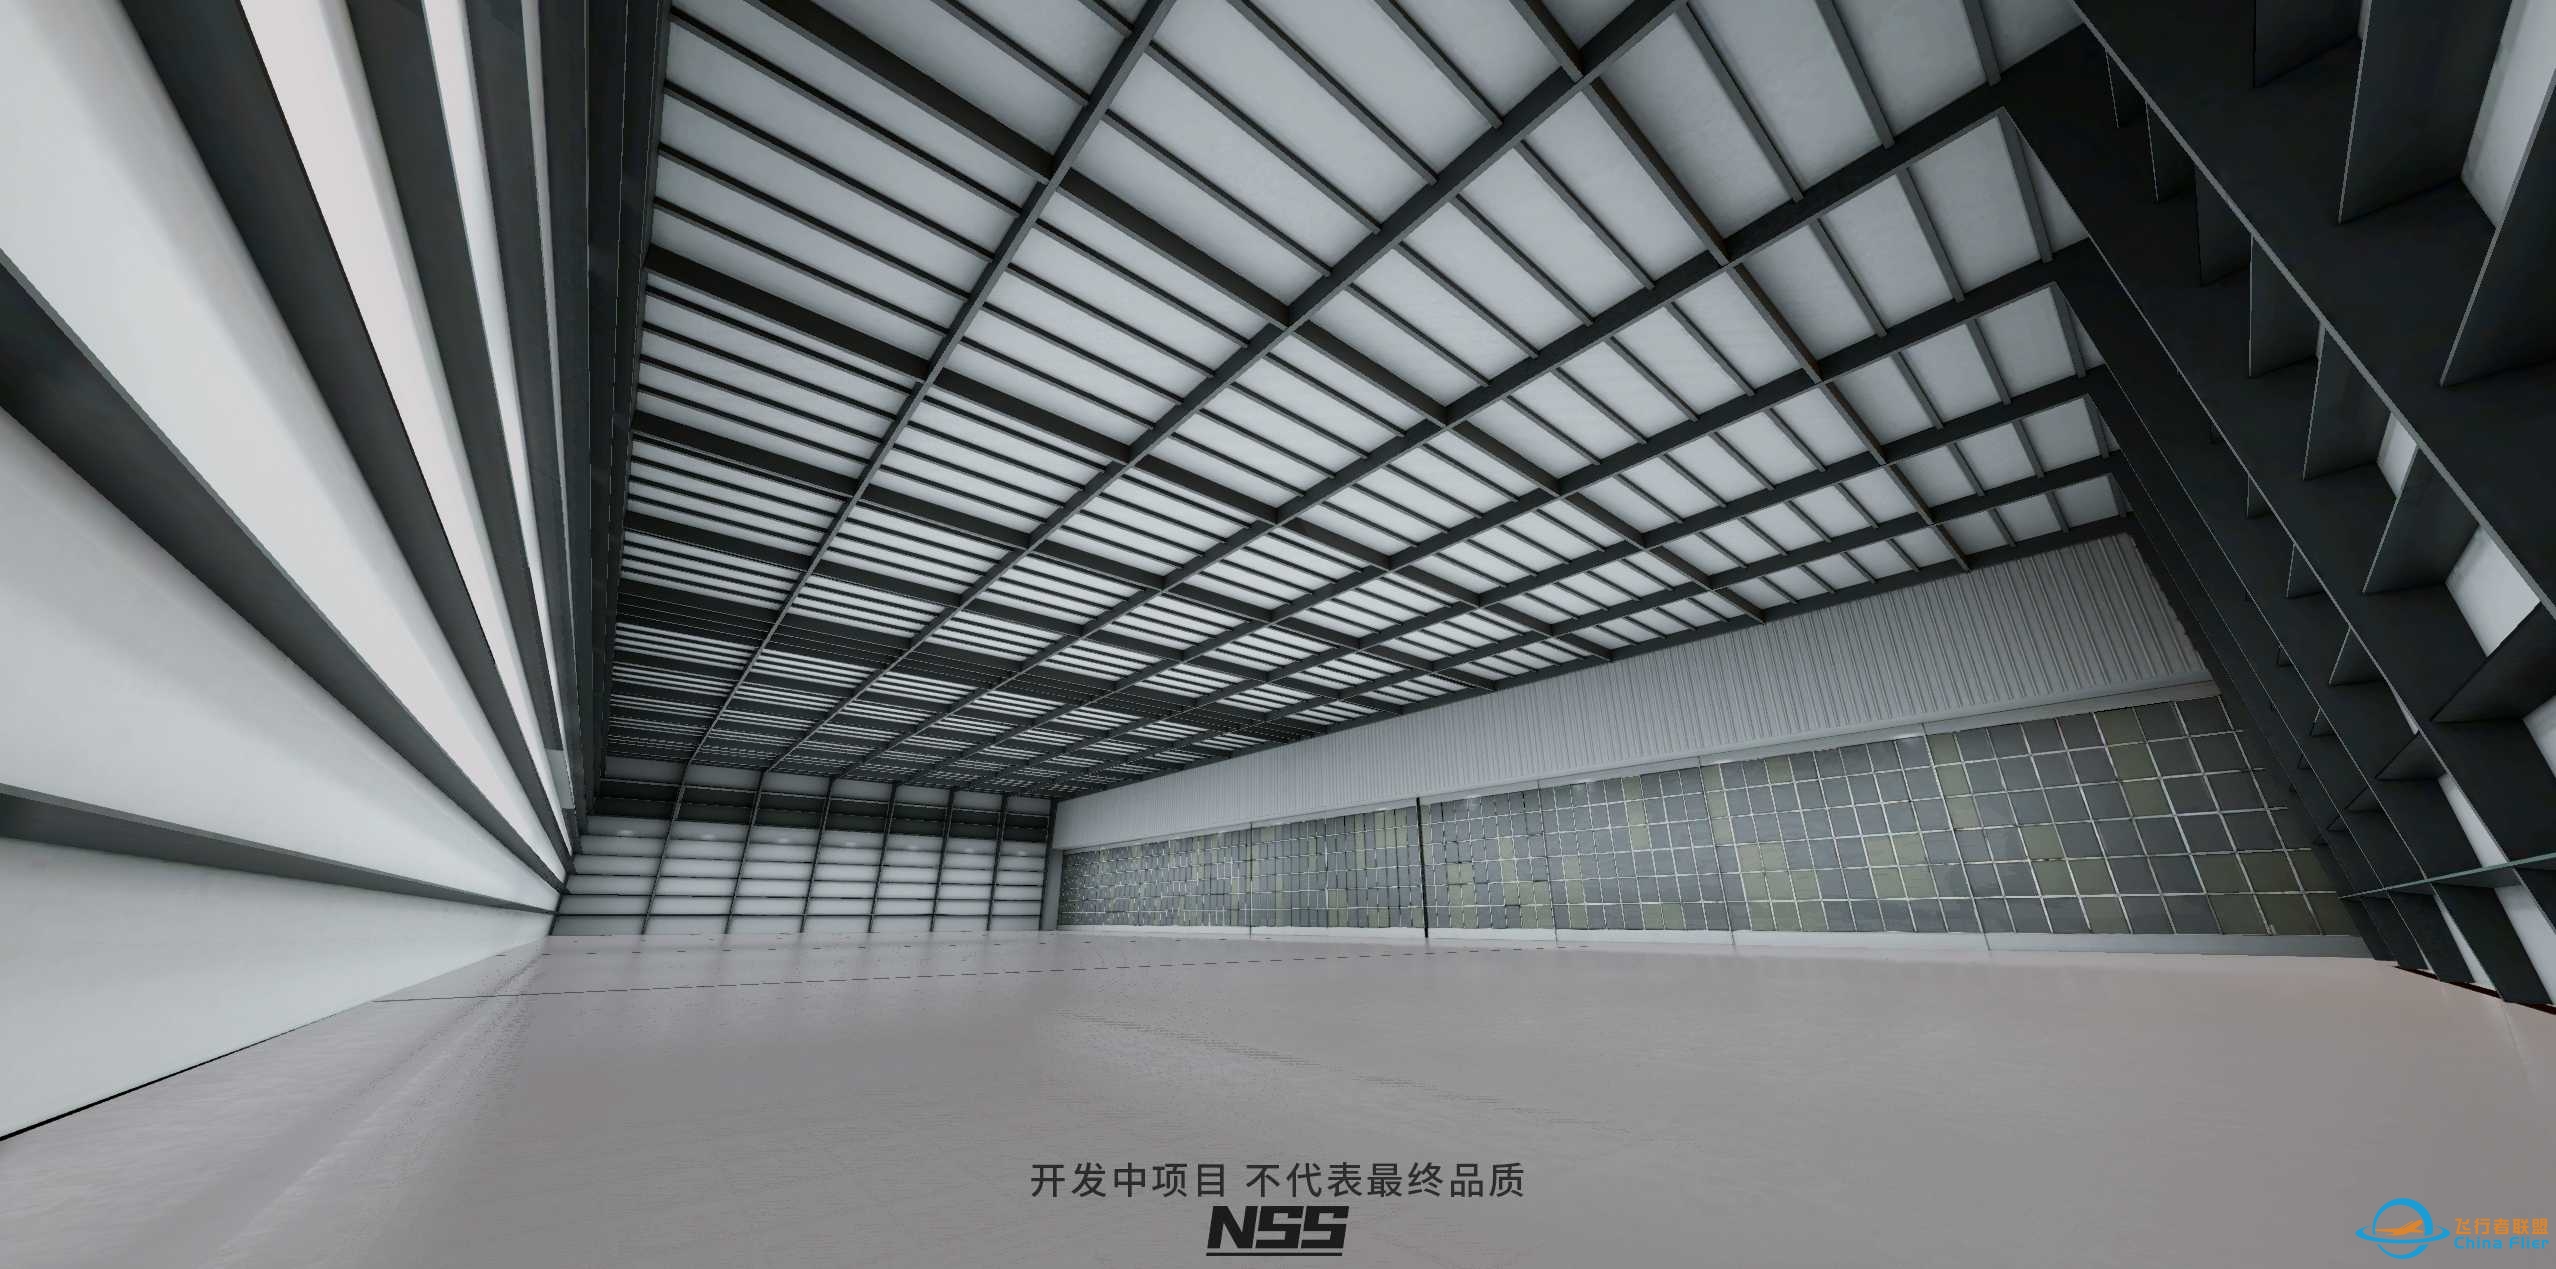 NSS地景开发组 ZSJN 济南遥墙国际机场项目预览 兼公布-8398 